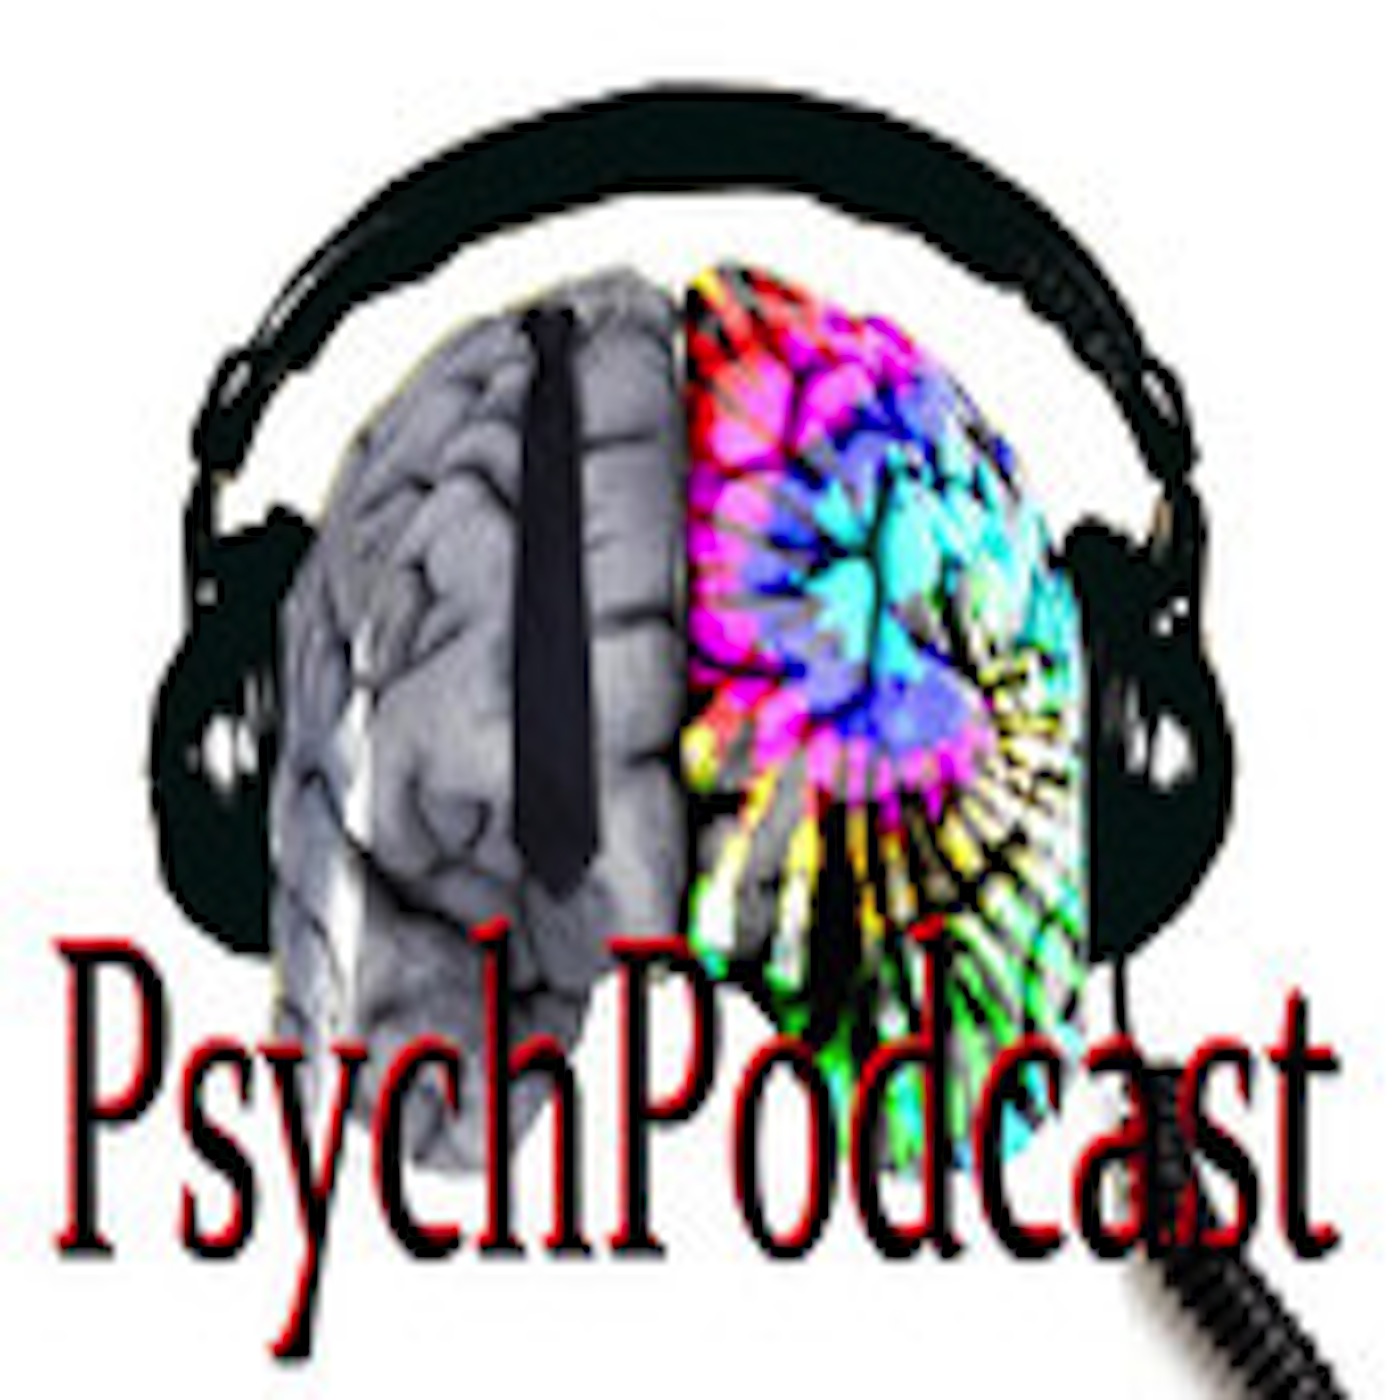 North Georgia Psychology Podcast